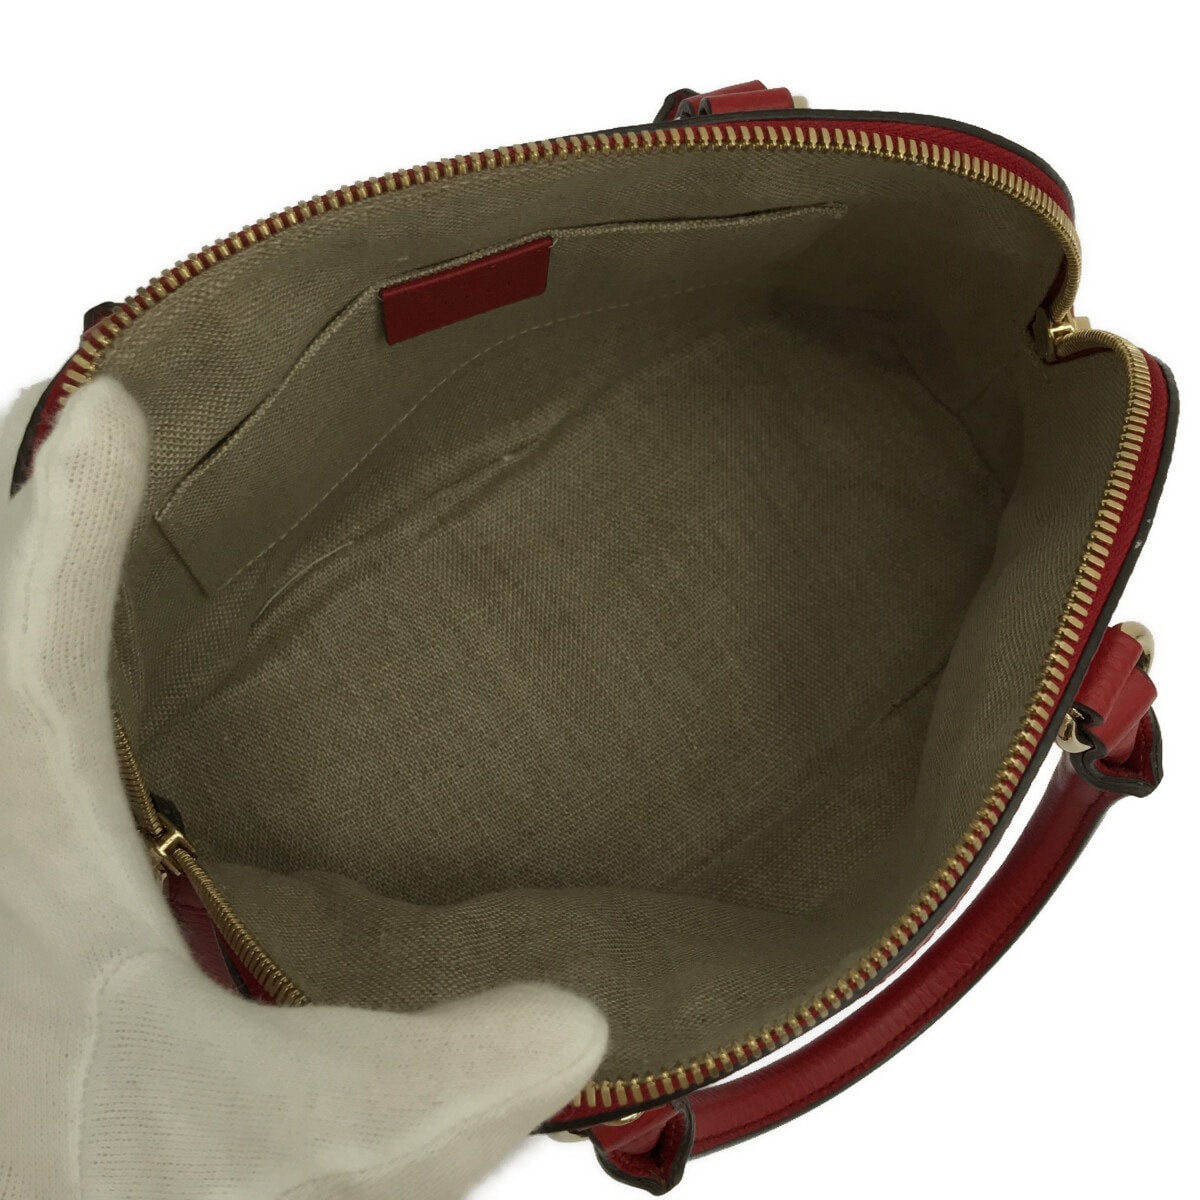 GUCCI - Red Interlocking G Handbag